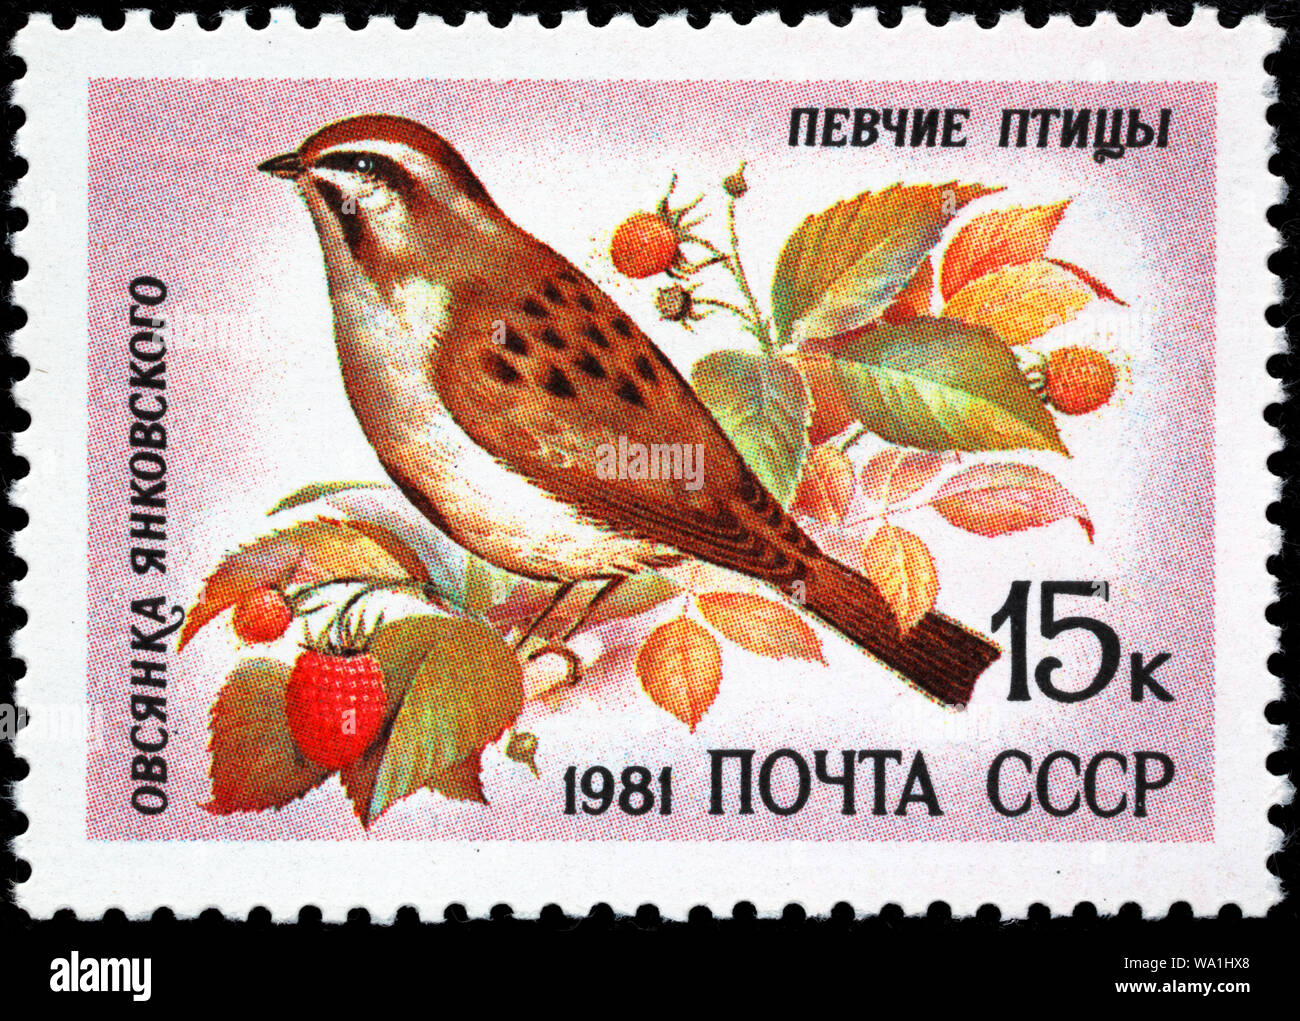 Rufous-backed Bunting, Emberiza jankowskii, Song bird, postage stamp, Russia, USSR, 1981 Stock Photo